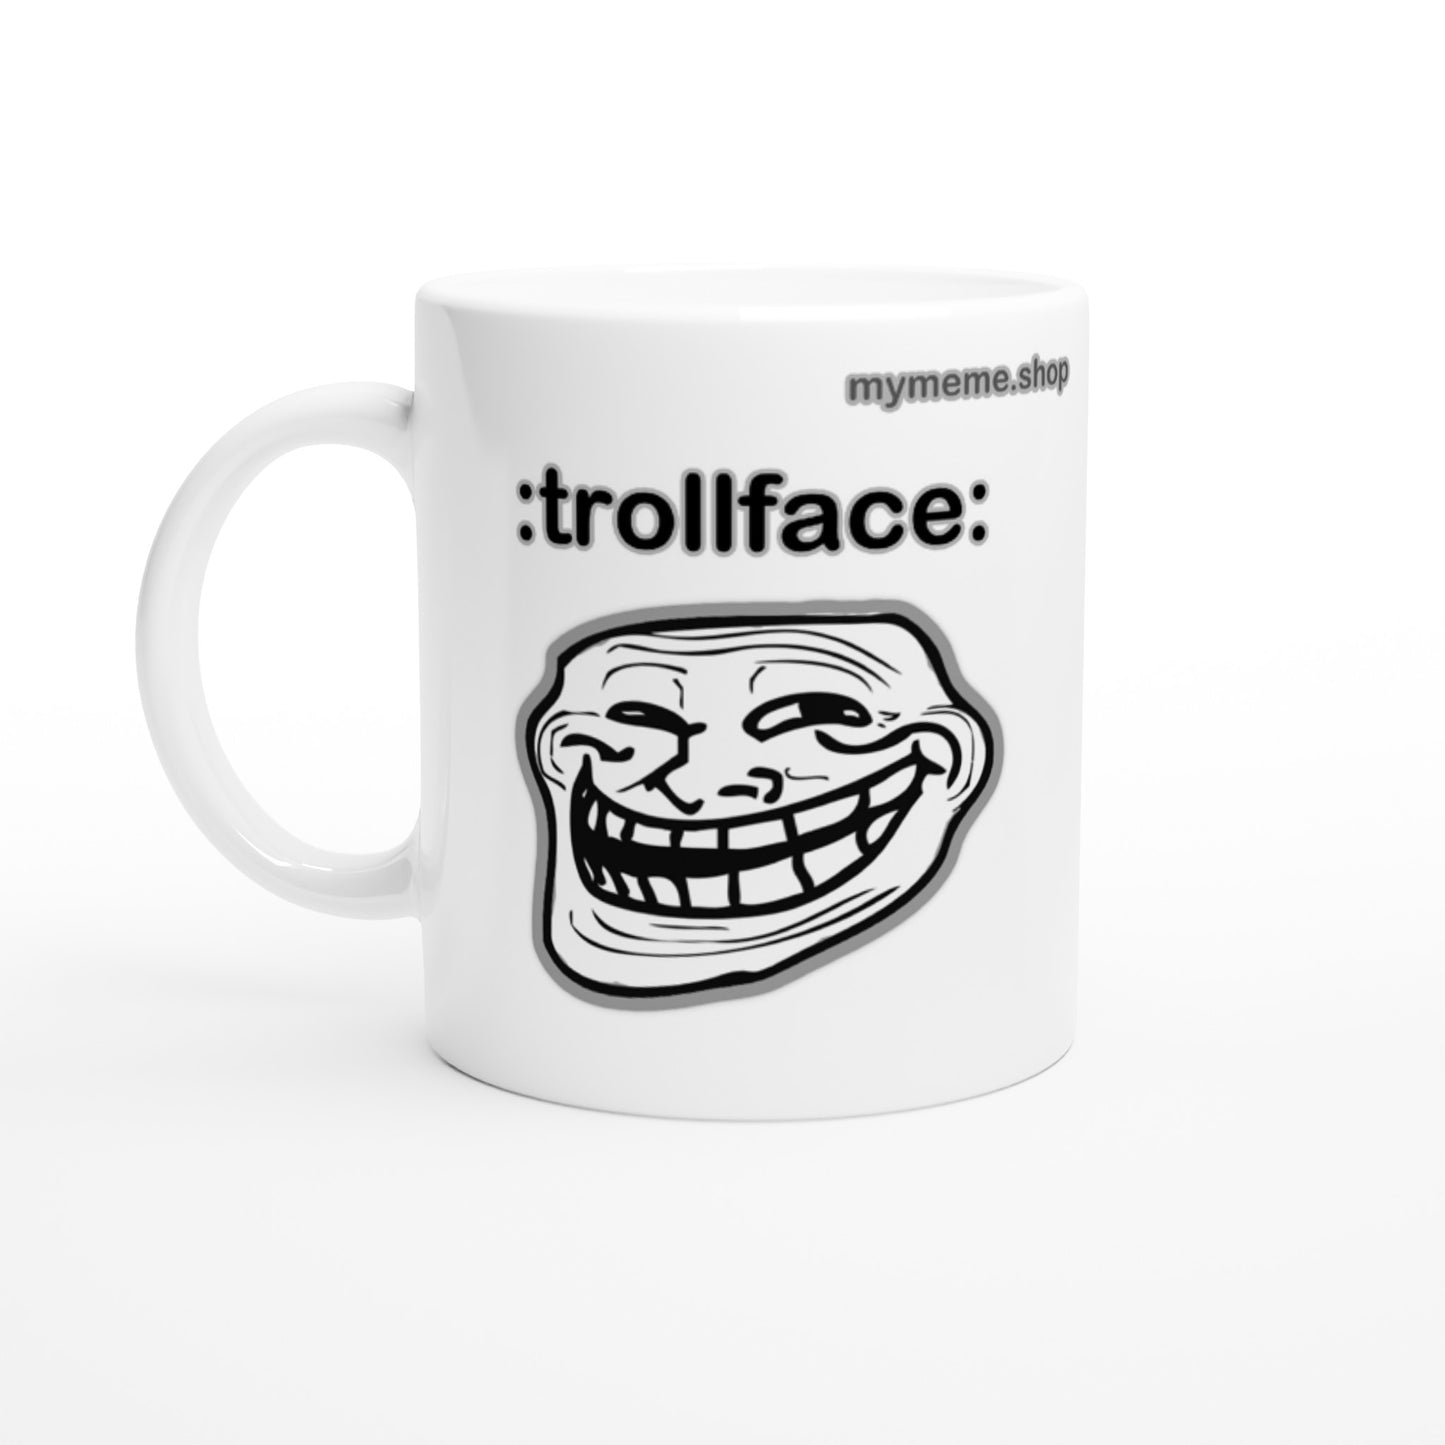 :trollface: Mug